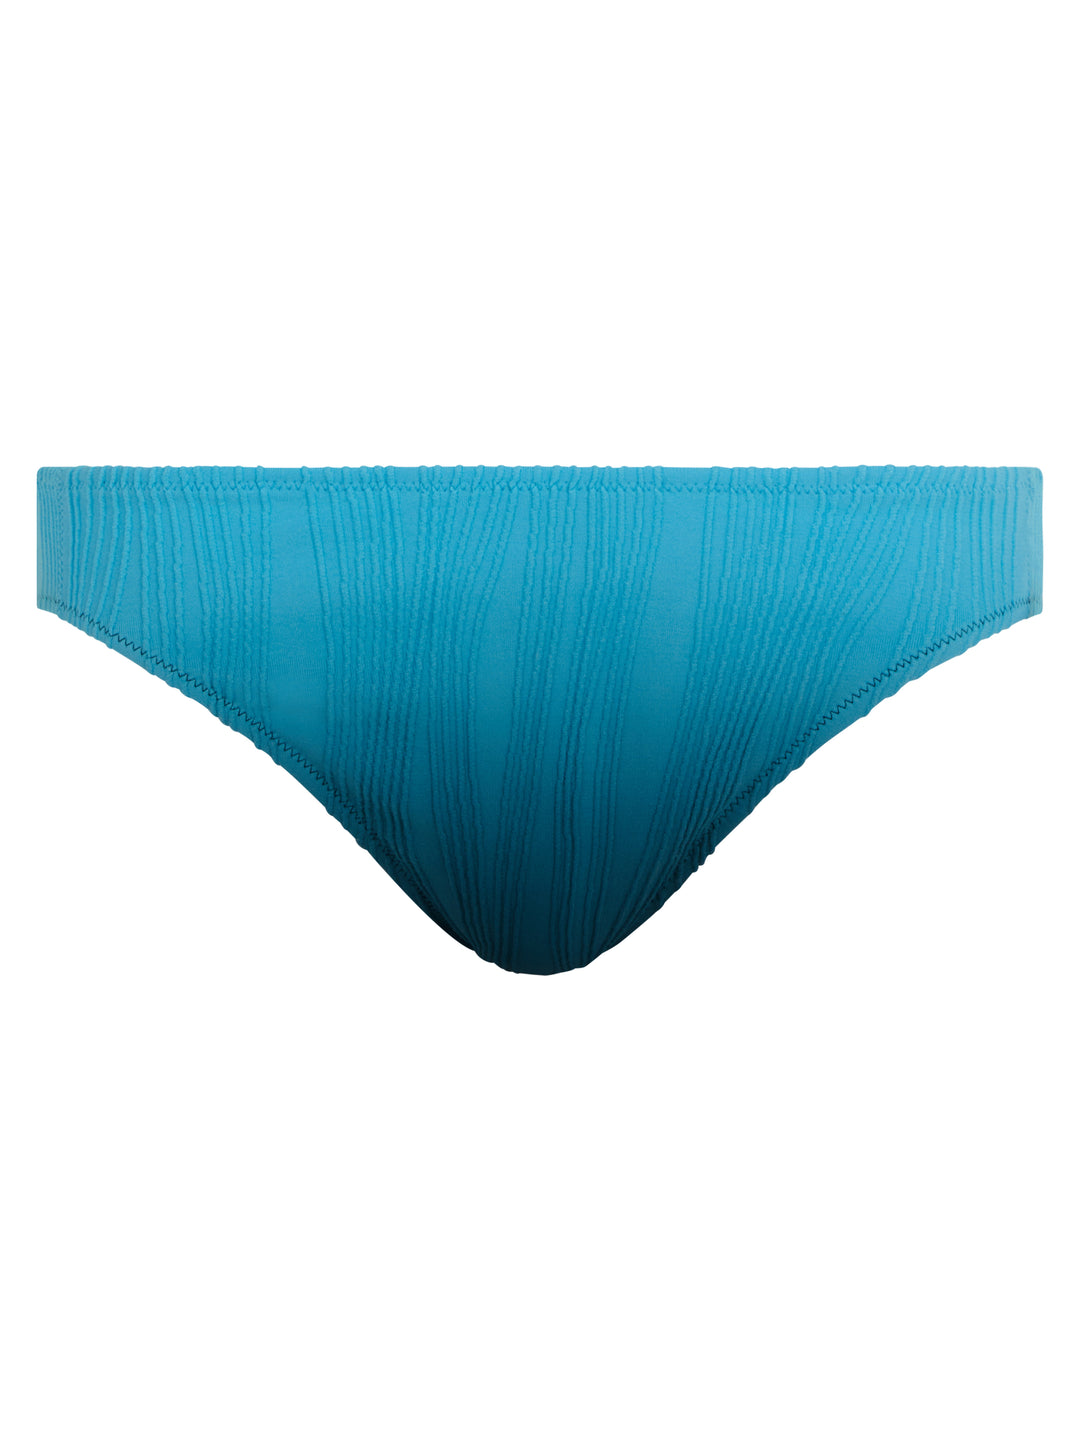 Chantelle Trajes de baño - Traje de baño talla única Braguita Tie & Dye azul